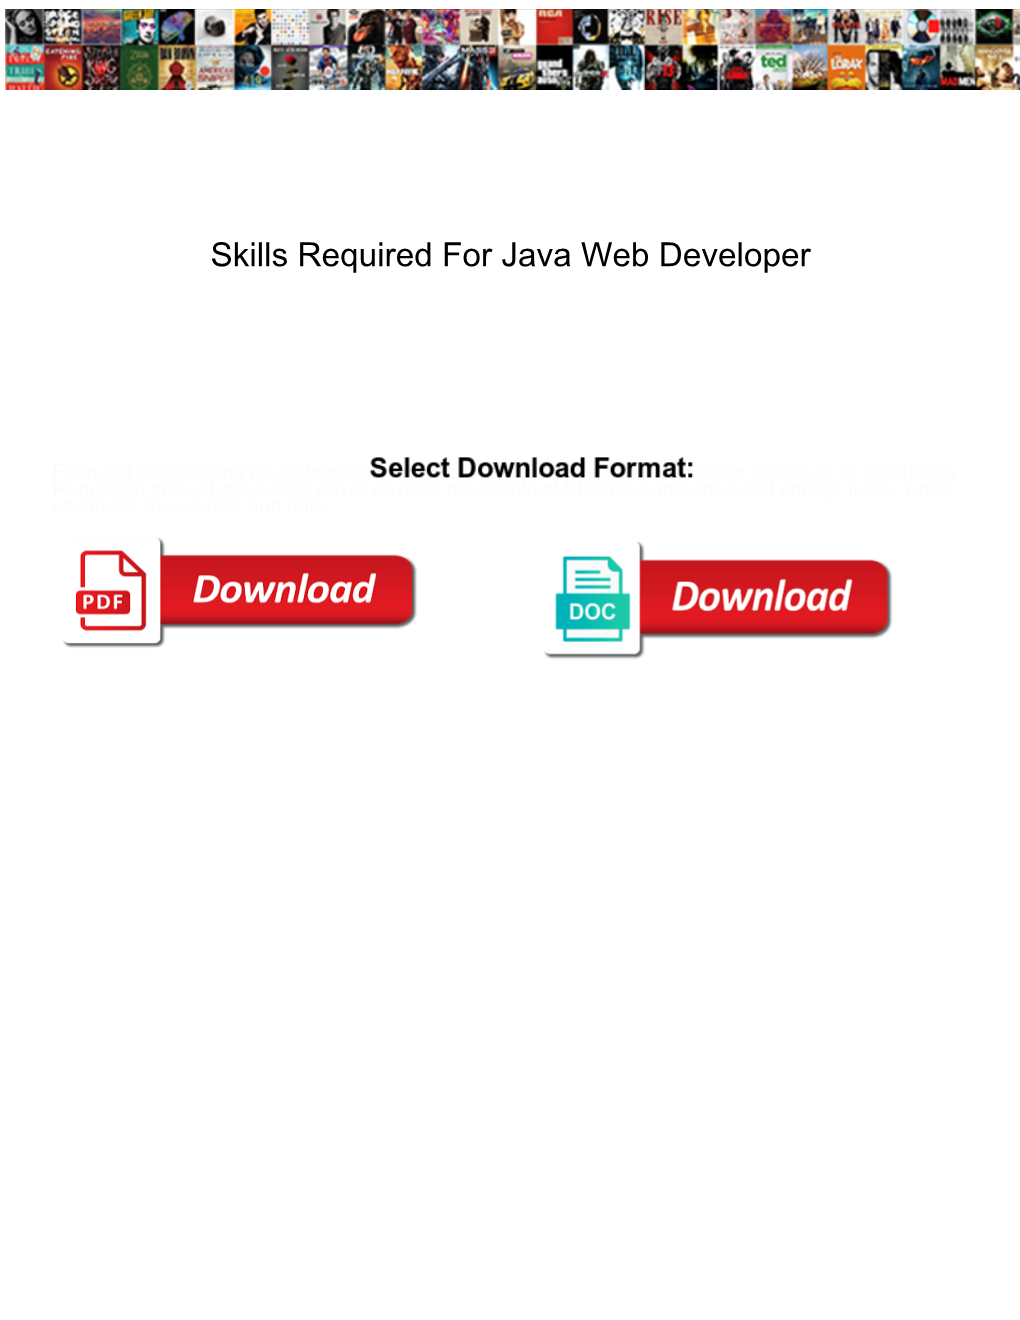 Skills Required for Java Web Developer